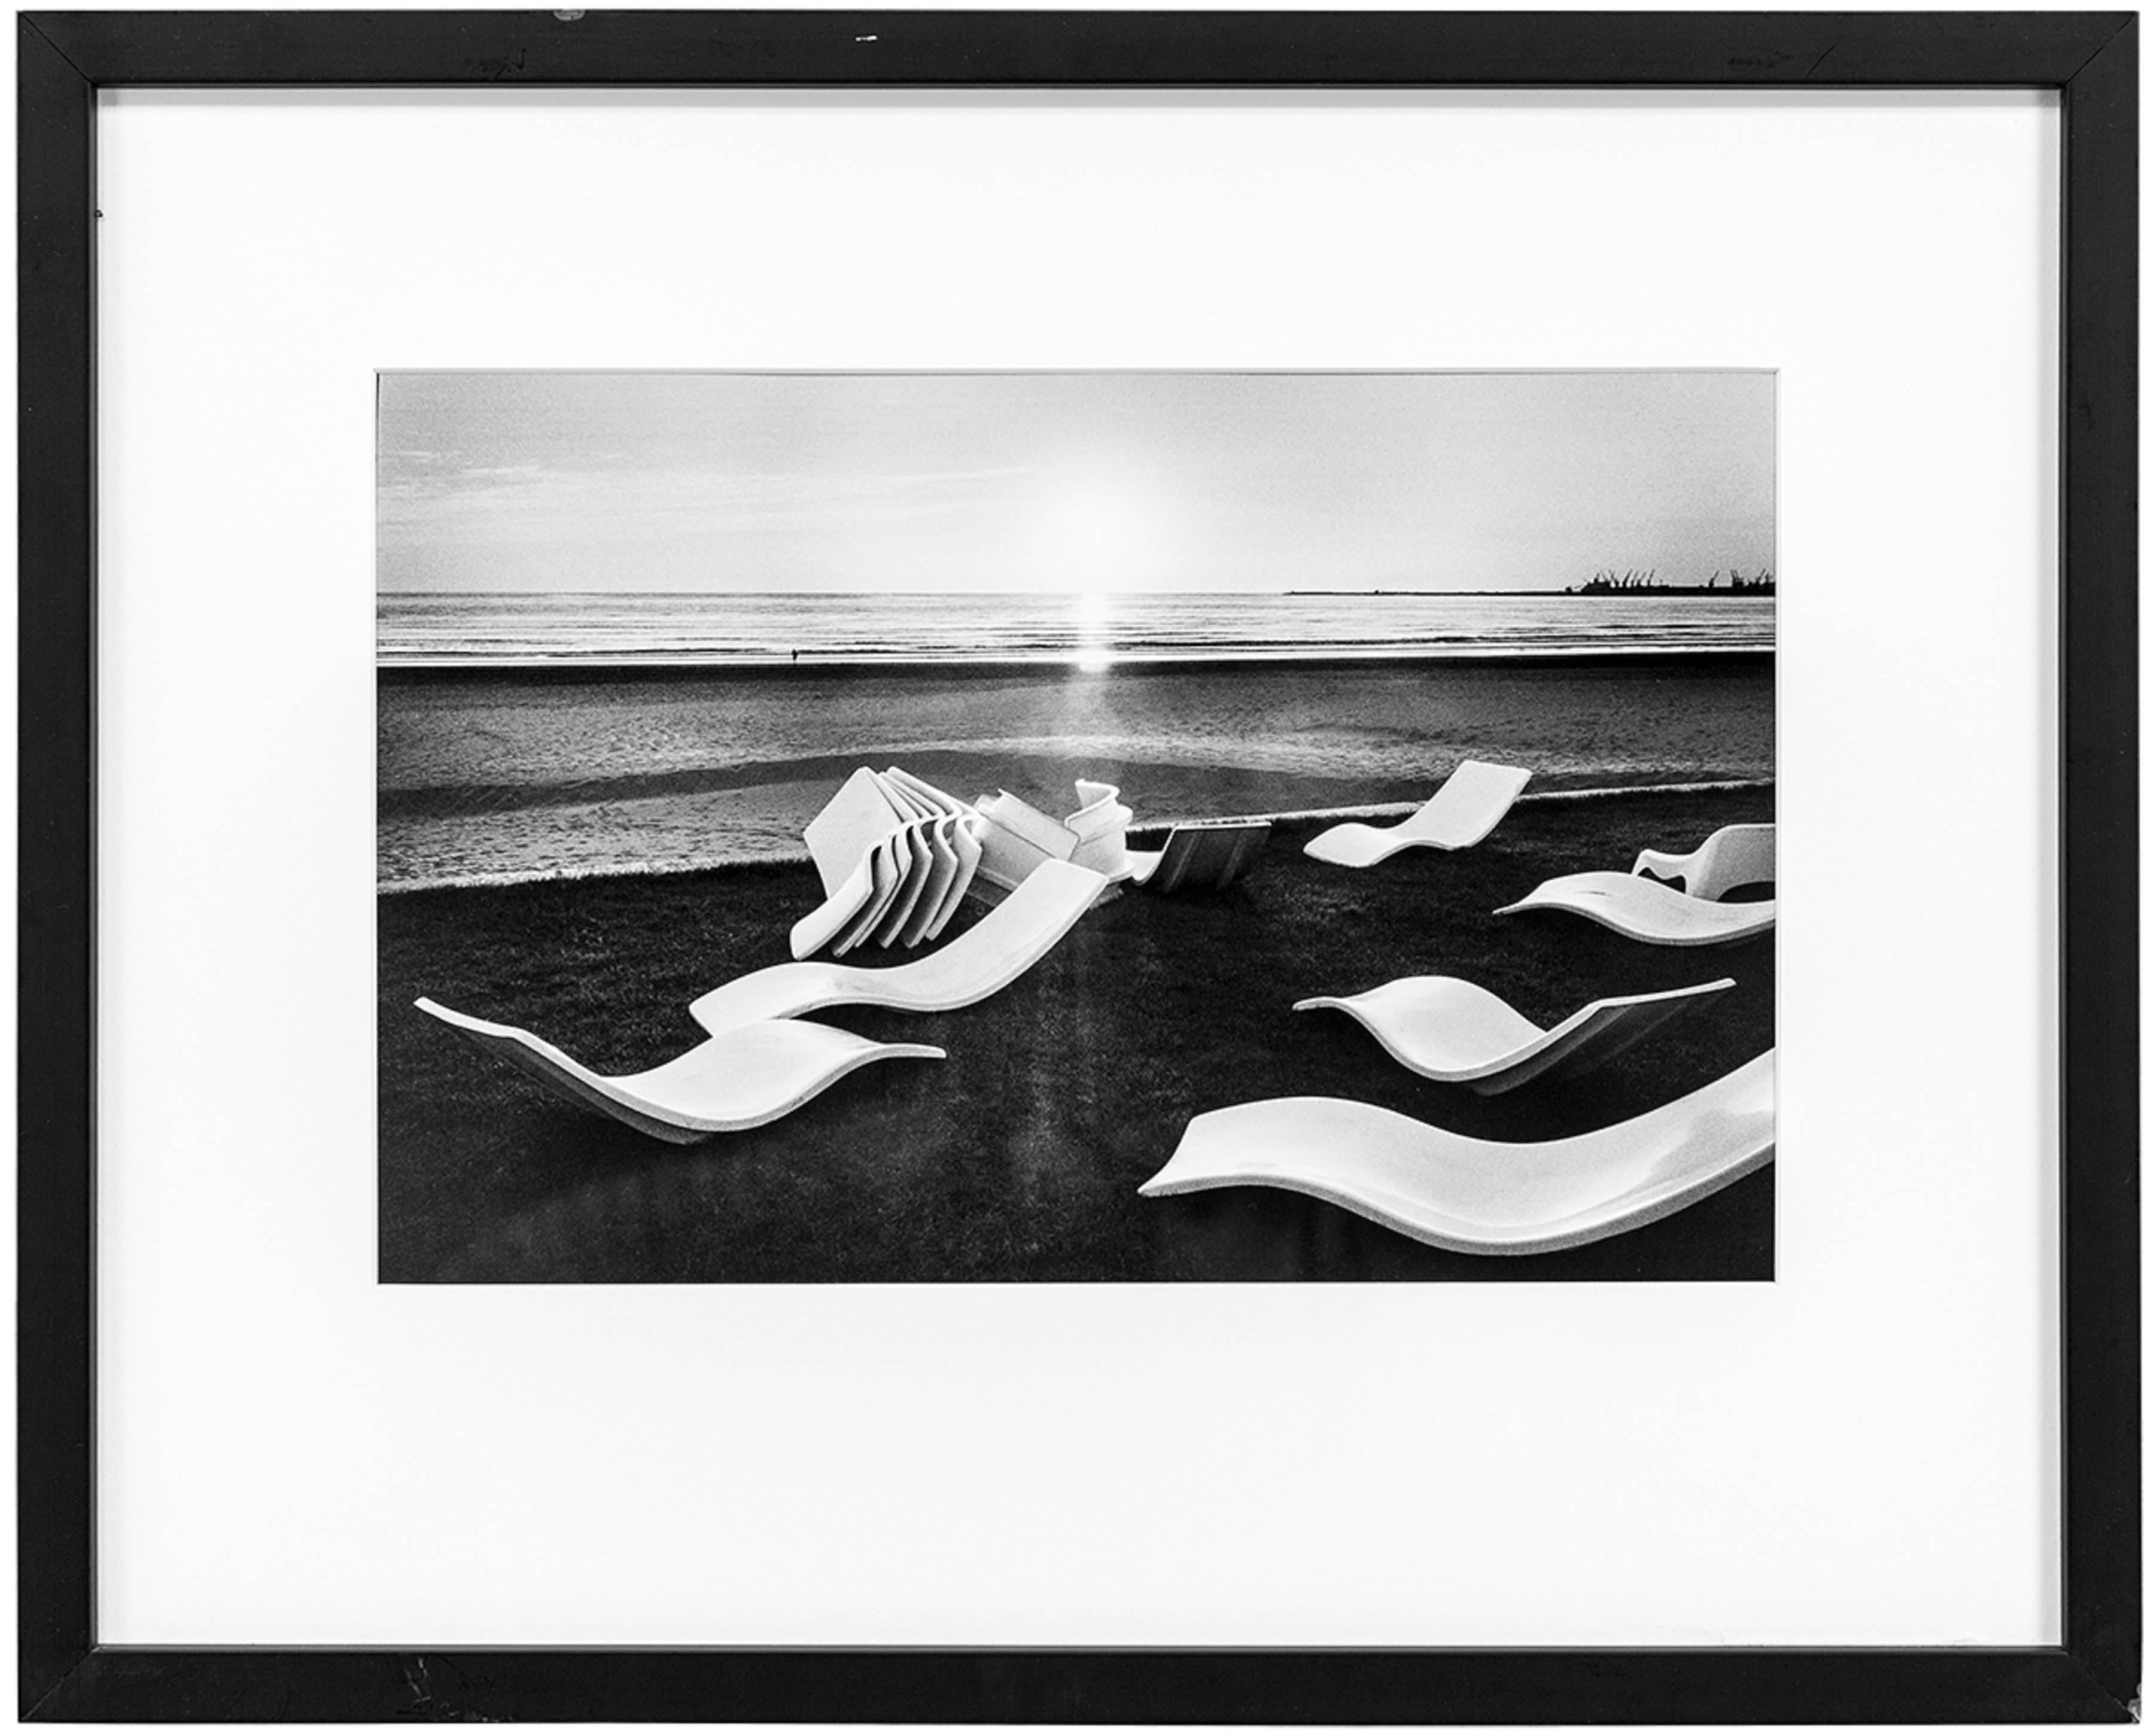 Martine Franck Landscape Photograph - Beach Run by Club Med, Agadir, Morocco Vintage Silver Gelatin Photograph Print